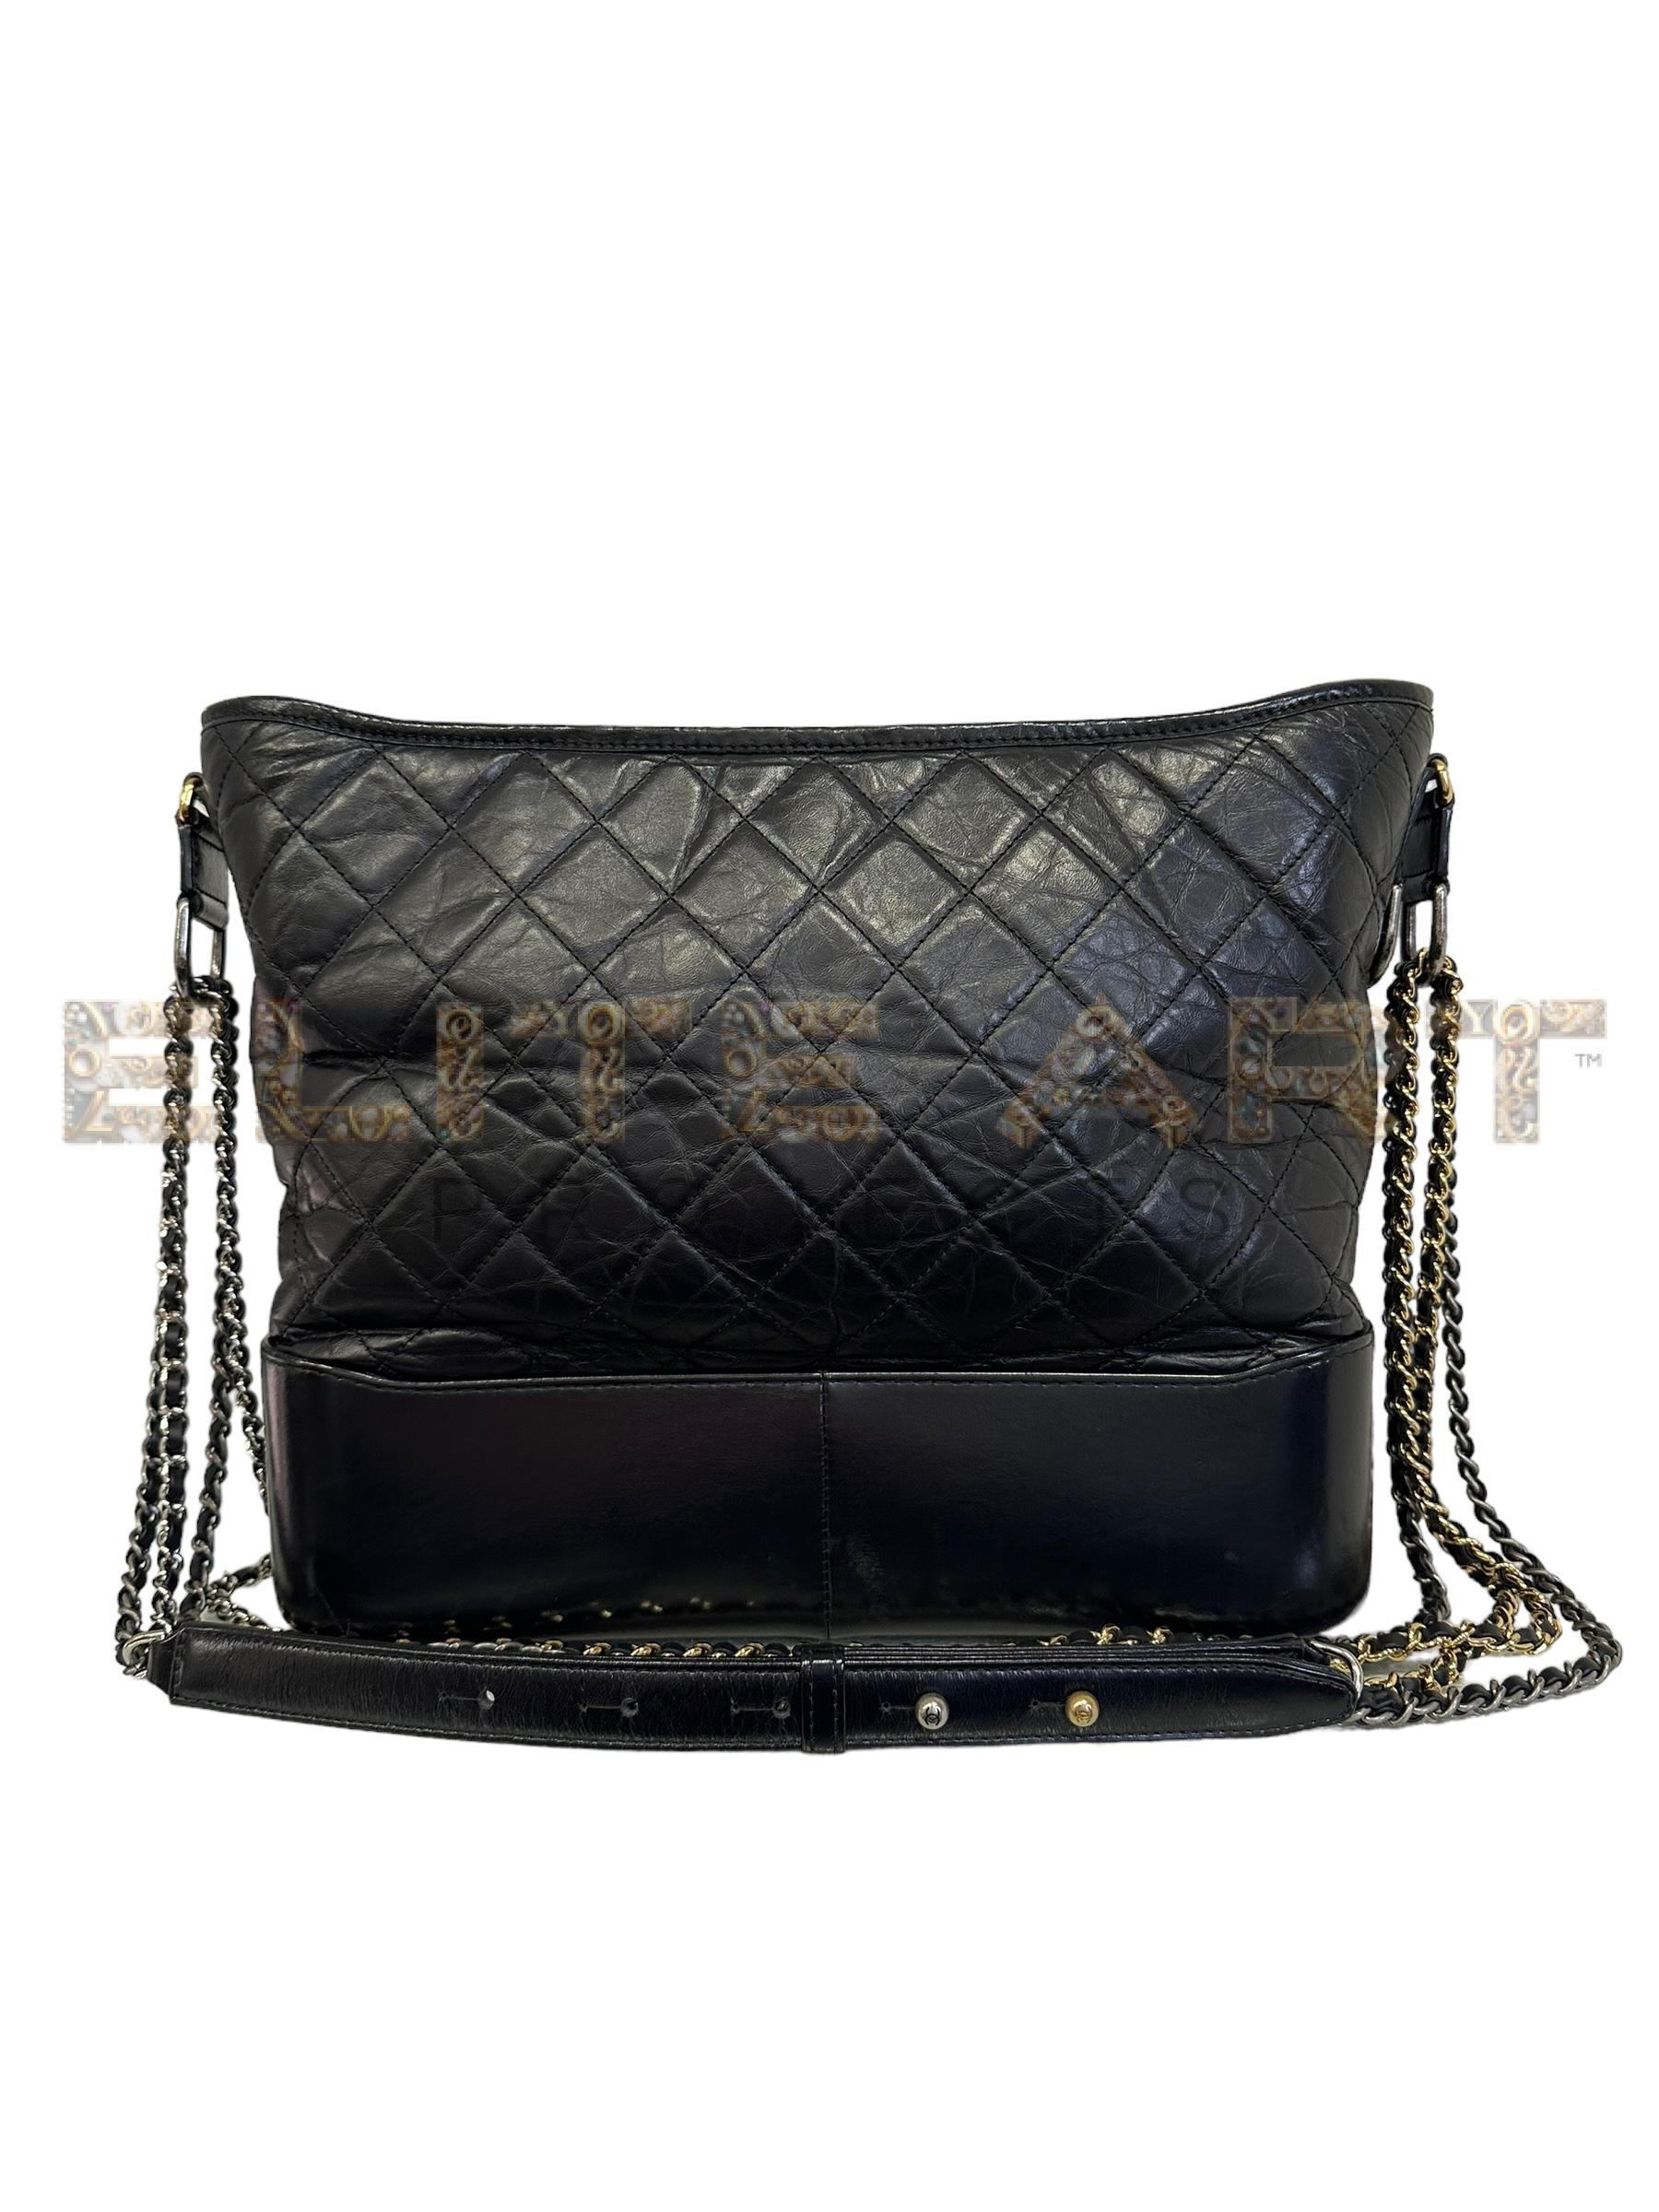 Chanel, Gabrielle, XL, bag, black leather, gold hardware, zip closure, good condition